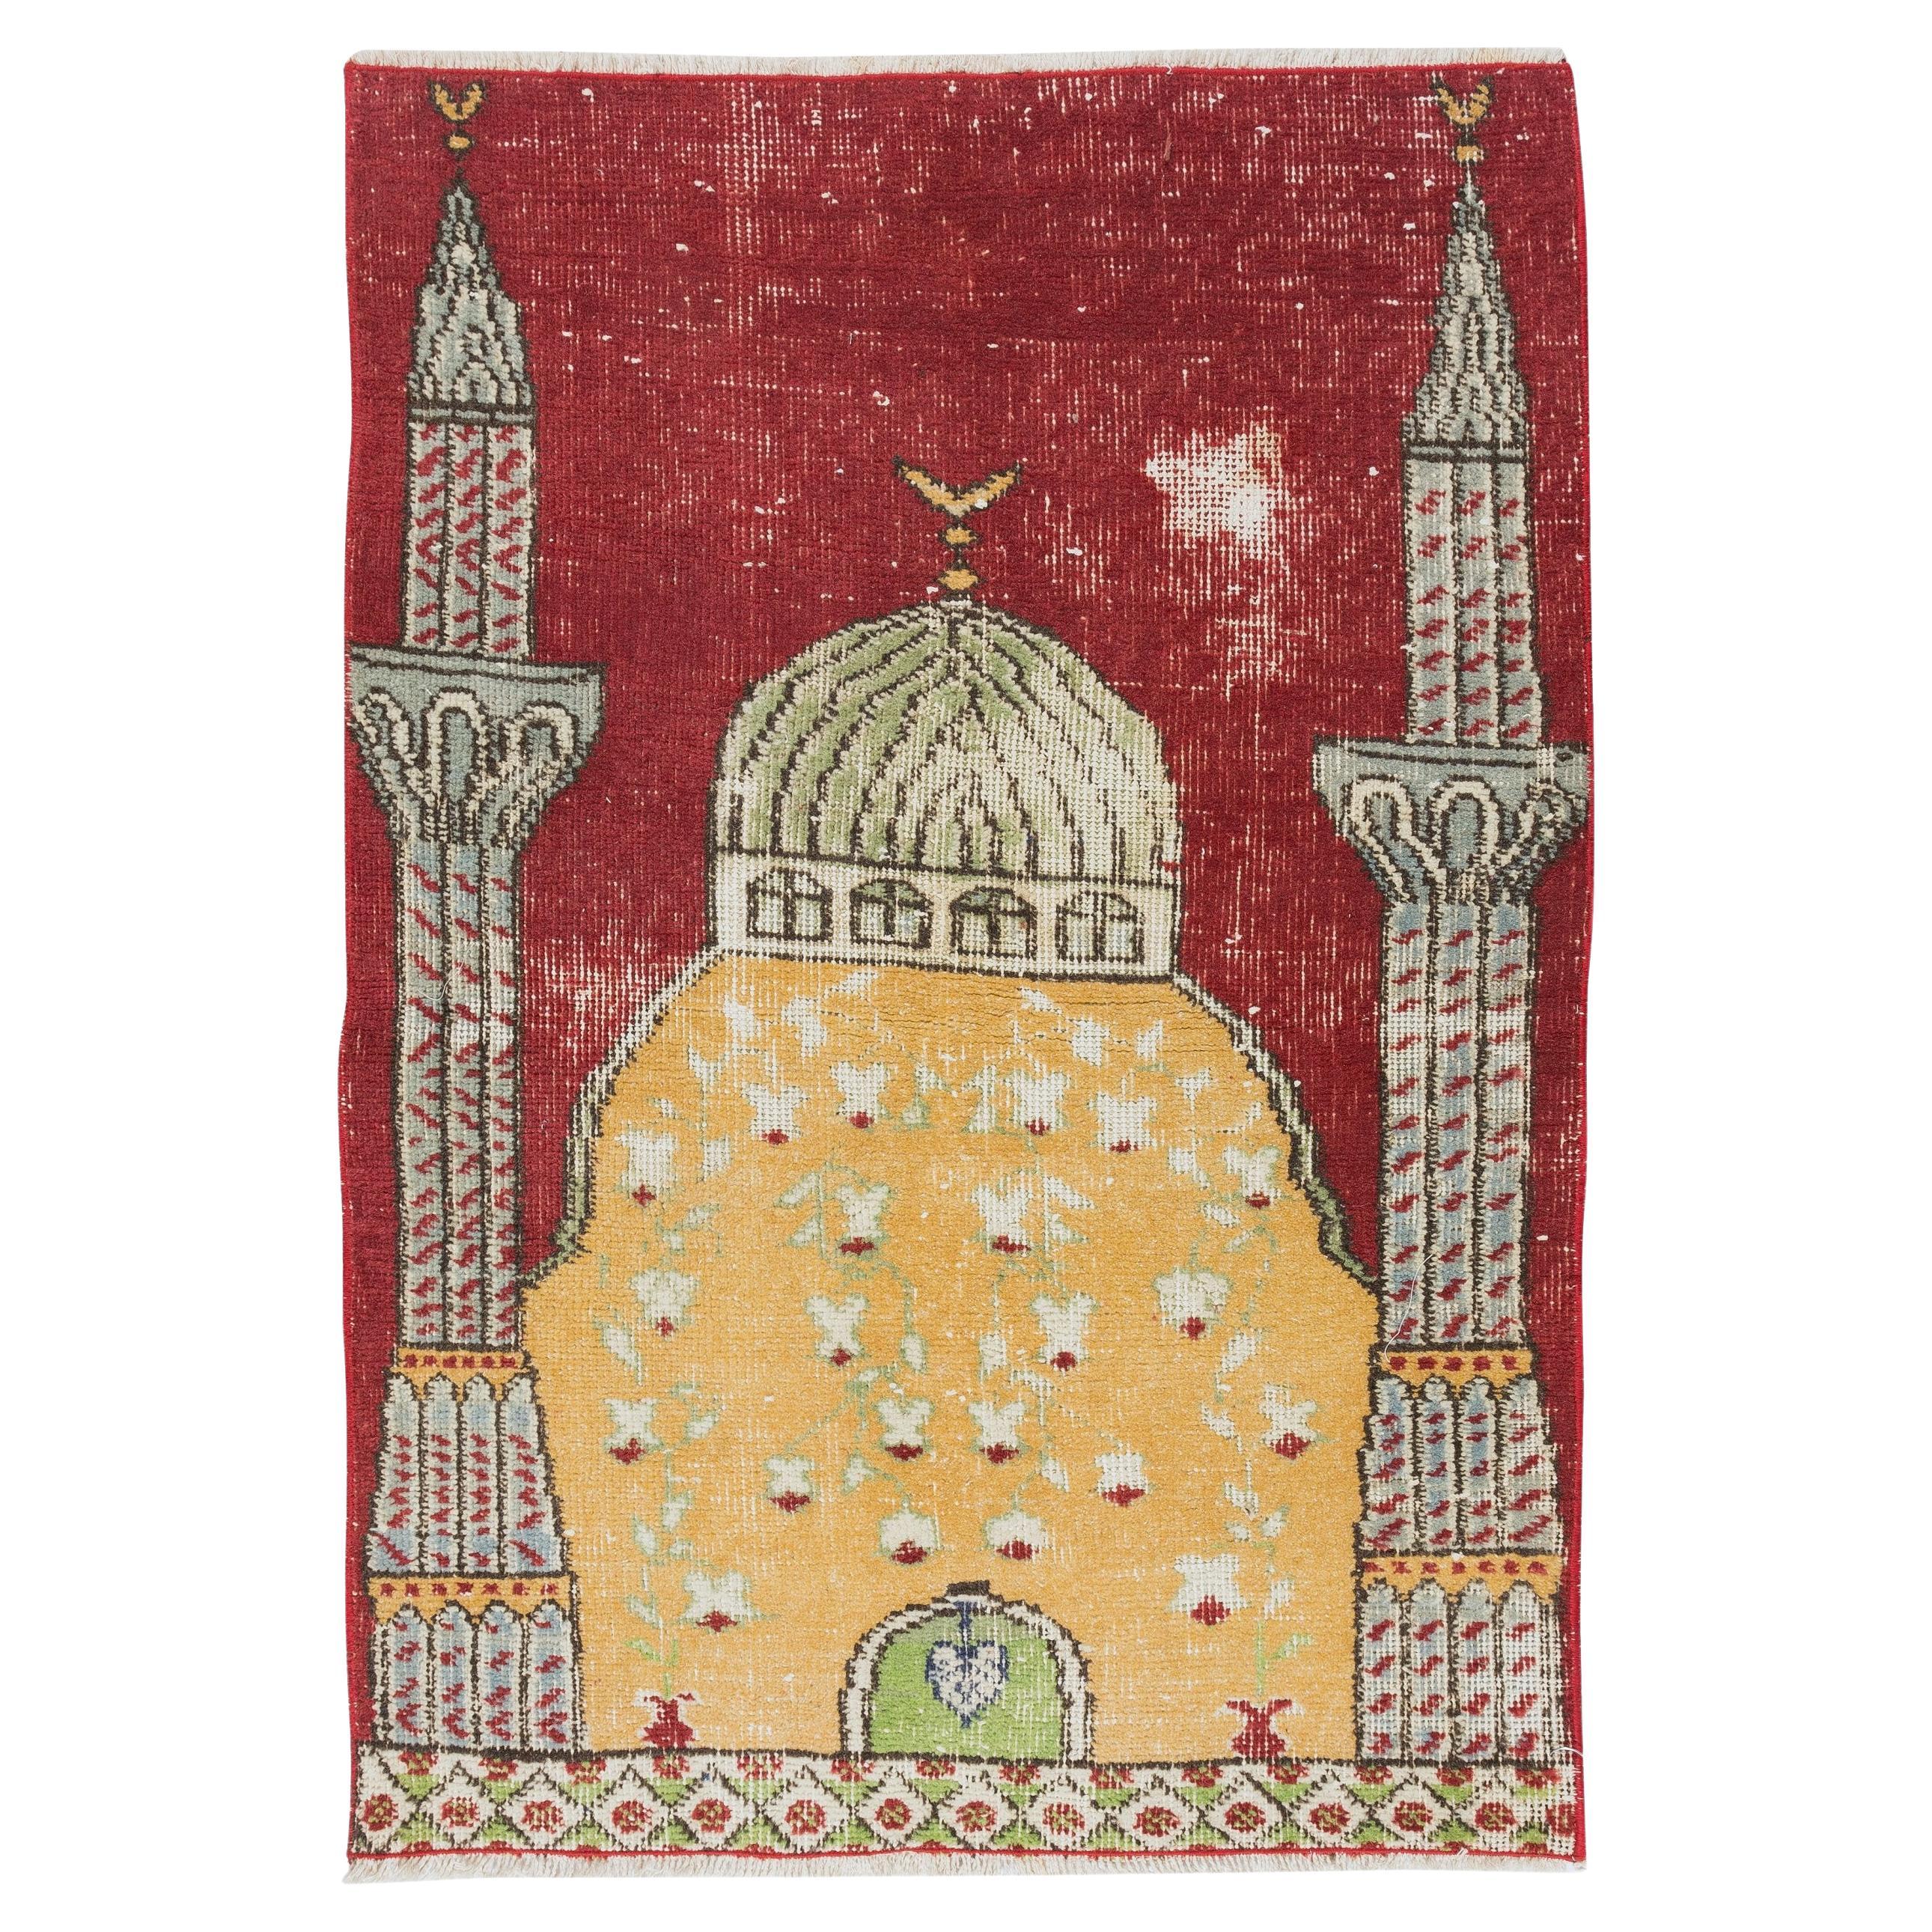 29x43 in Prayer Rug with Mosque Motif, Vintage Handmade Anatolian Rug